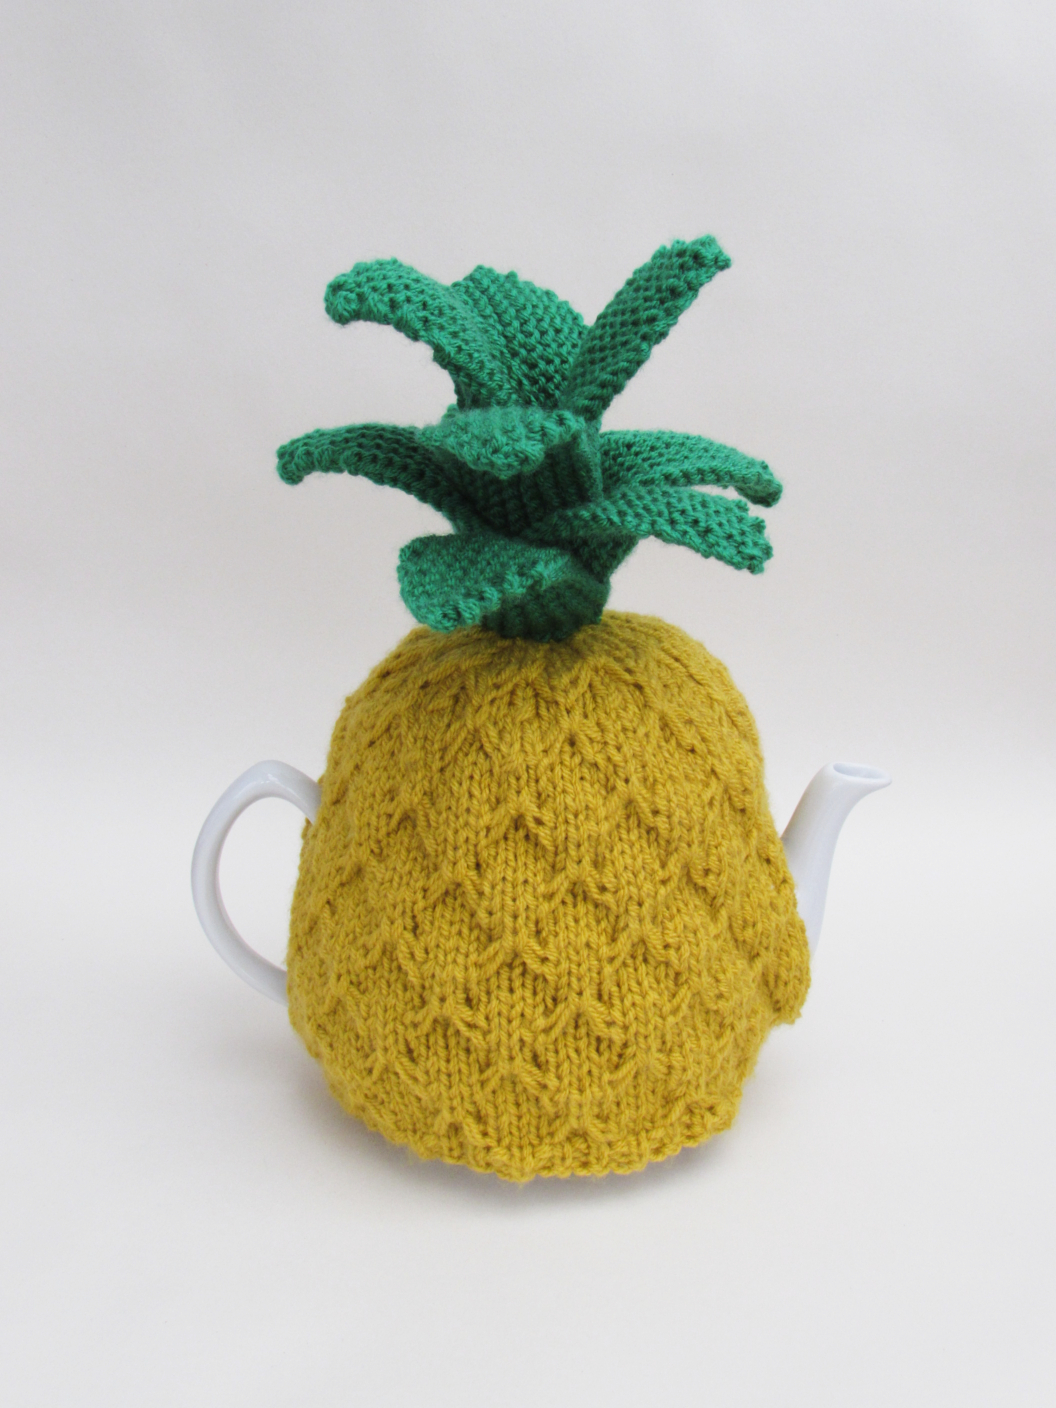 Pineapple knitting pattern